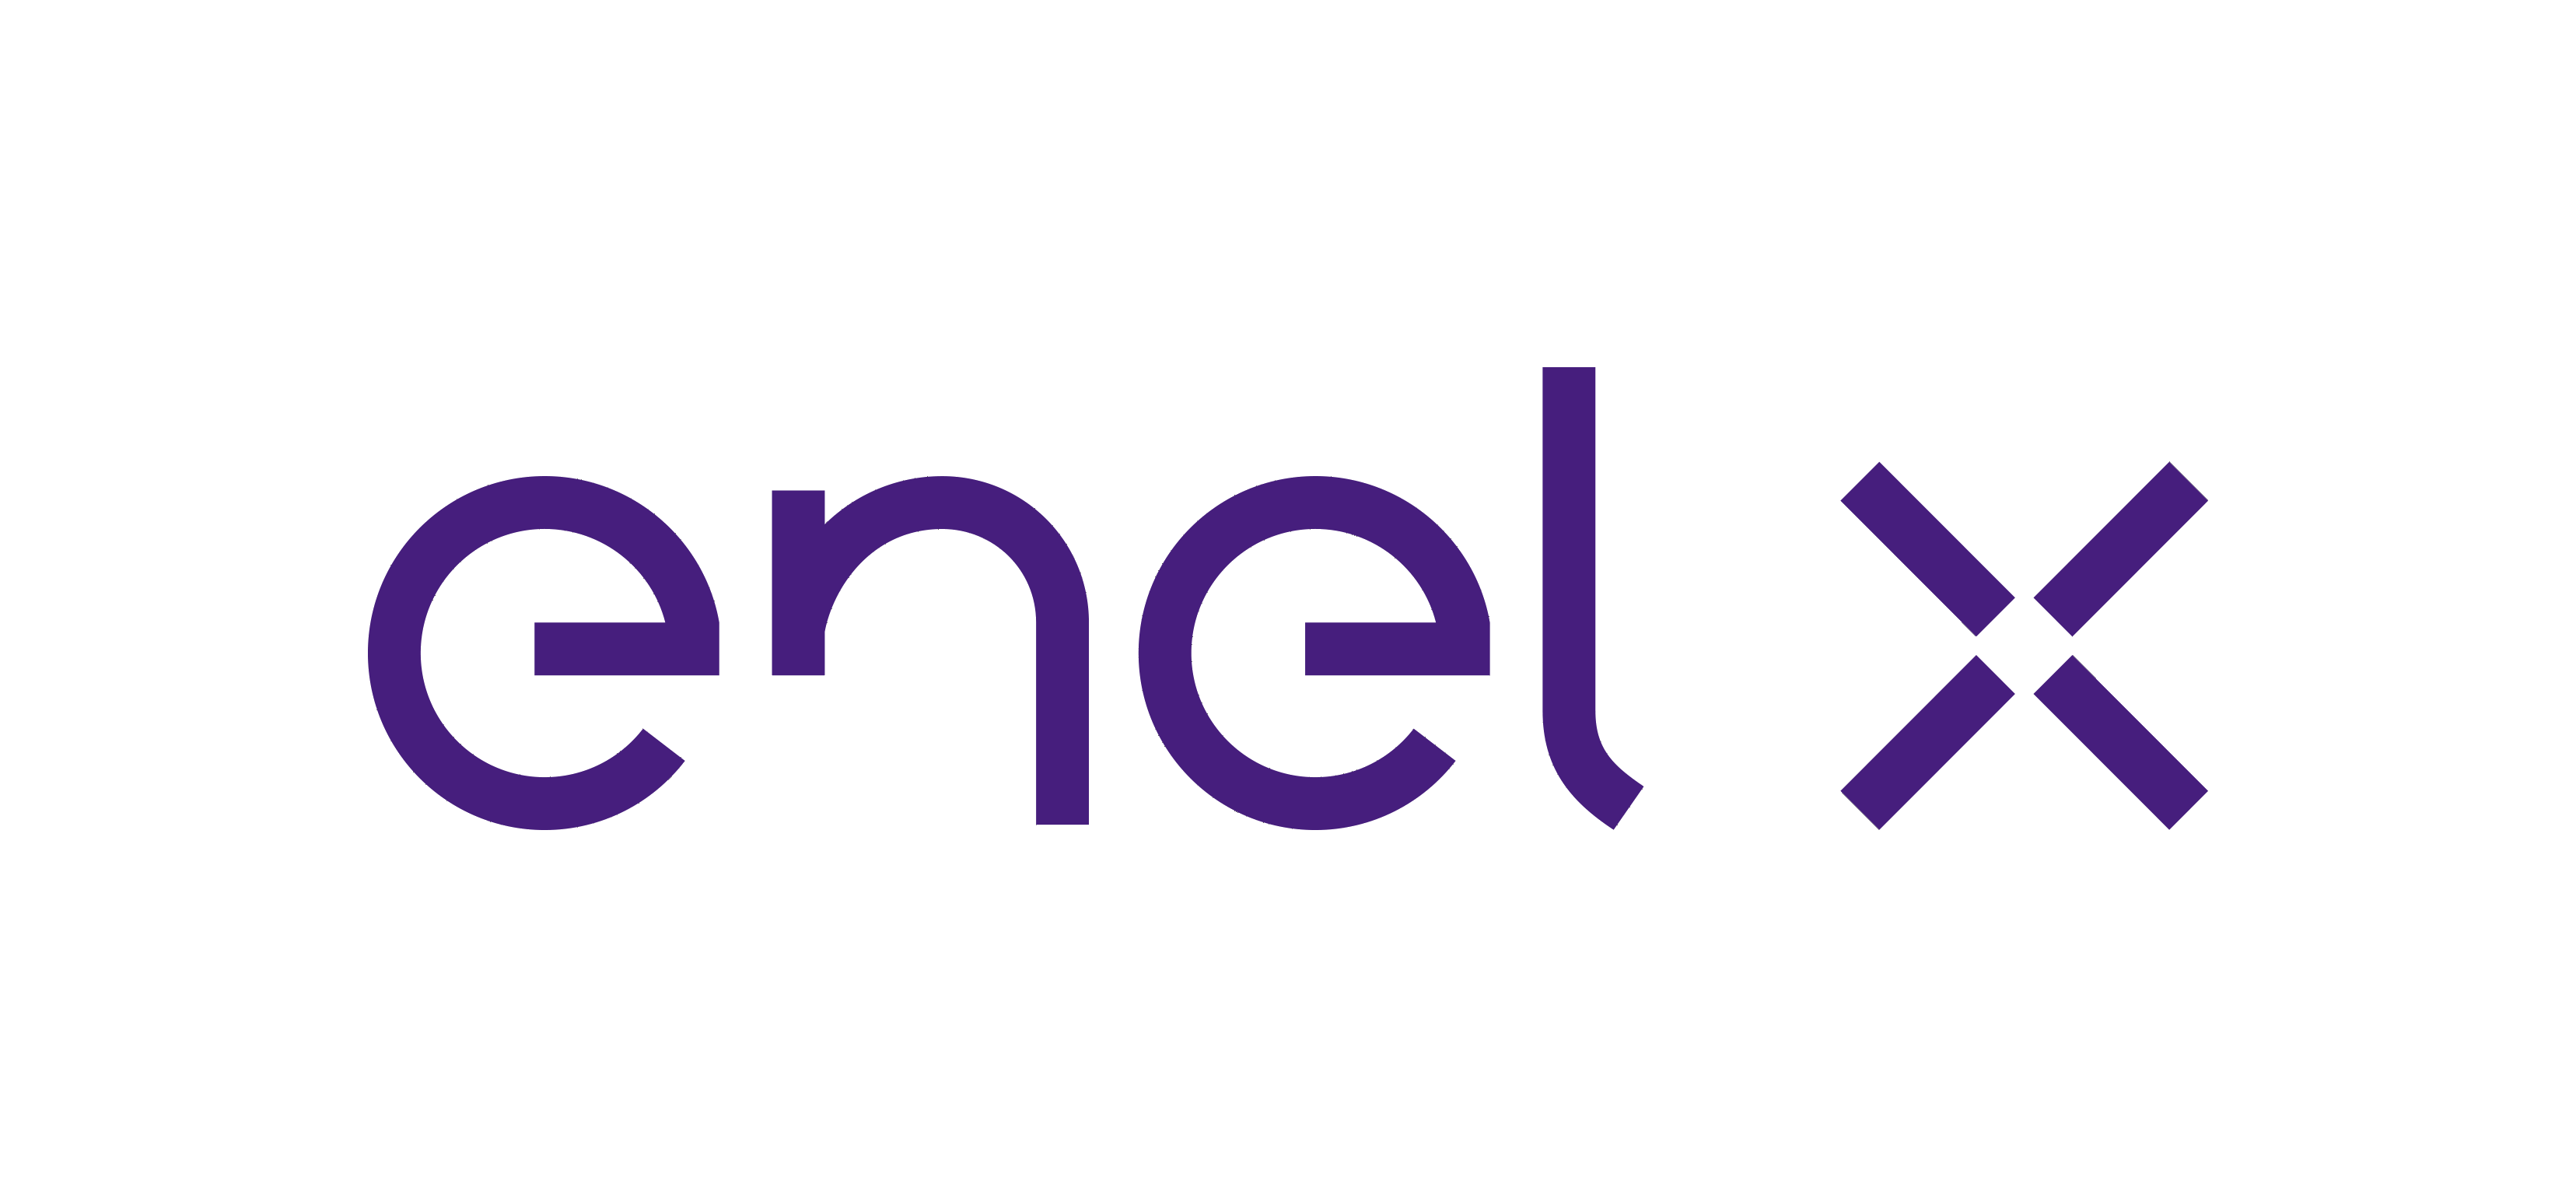 Navigant Logo - Enel X ranks third on the Navigant Leaderboard | Enel X